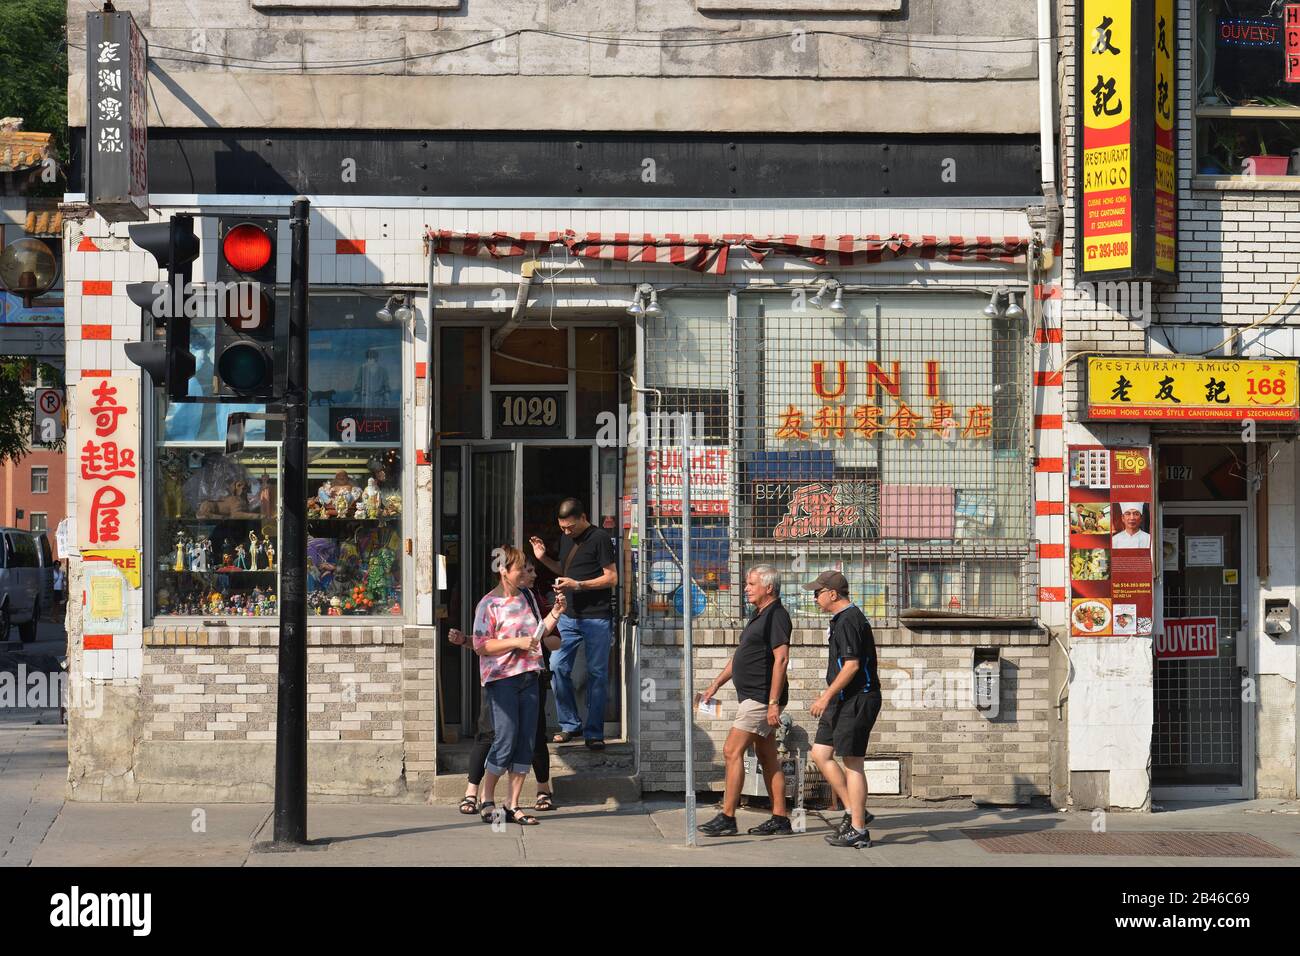 Strassenszene, Chinatown, Montreal, Quebec, Kanada Stock Photo